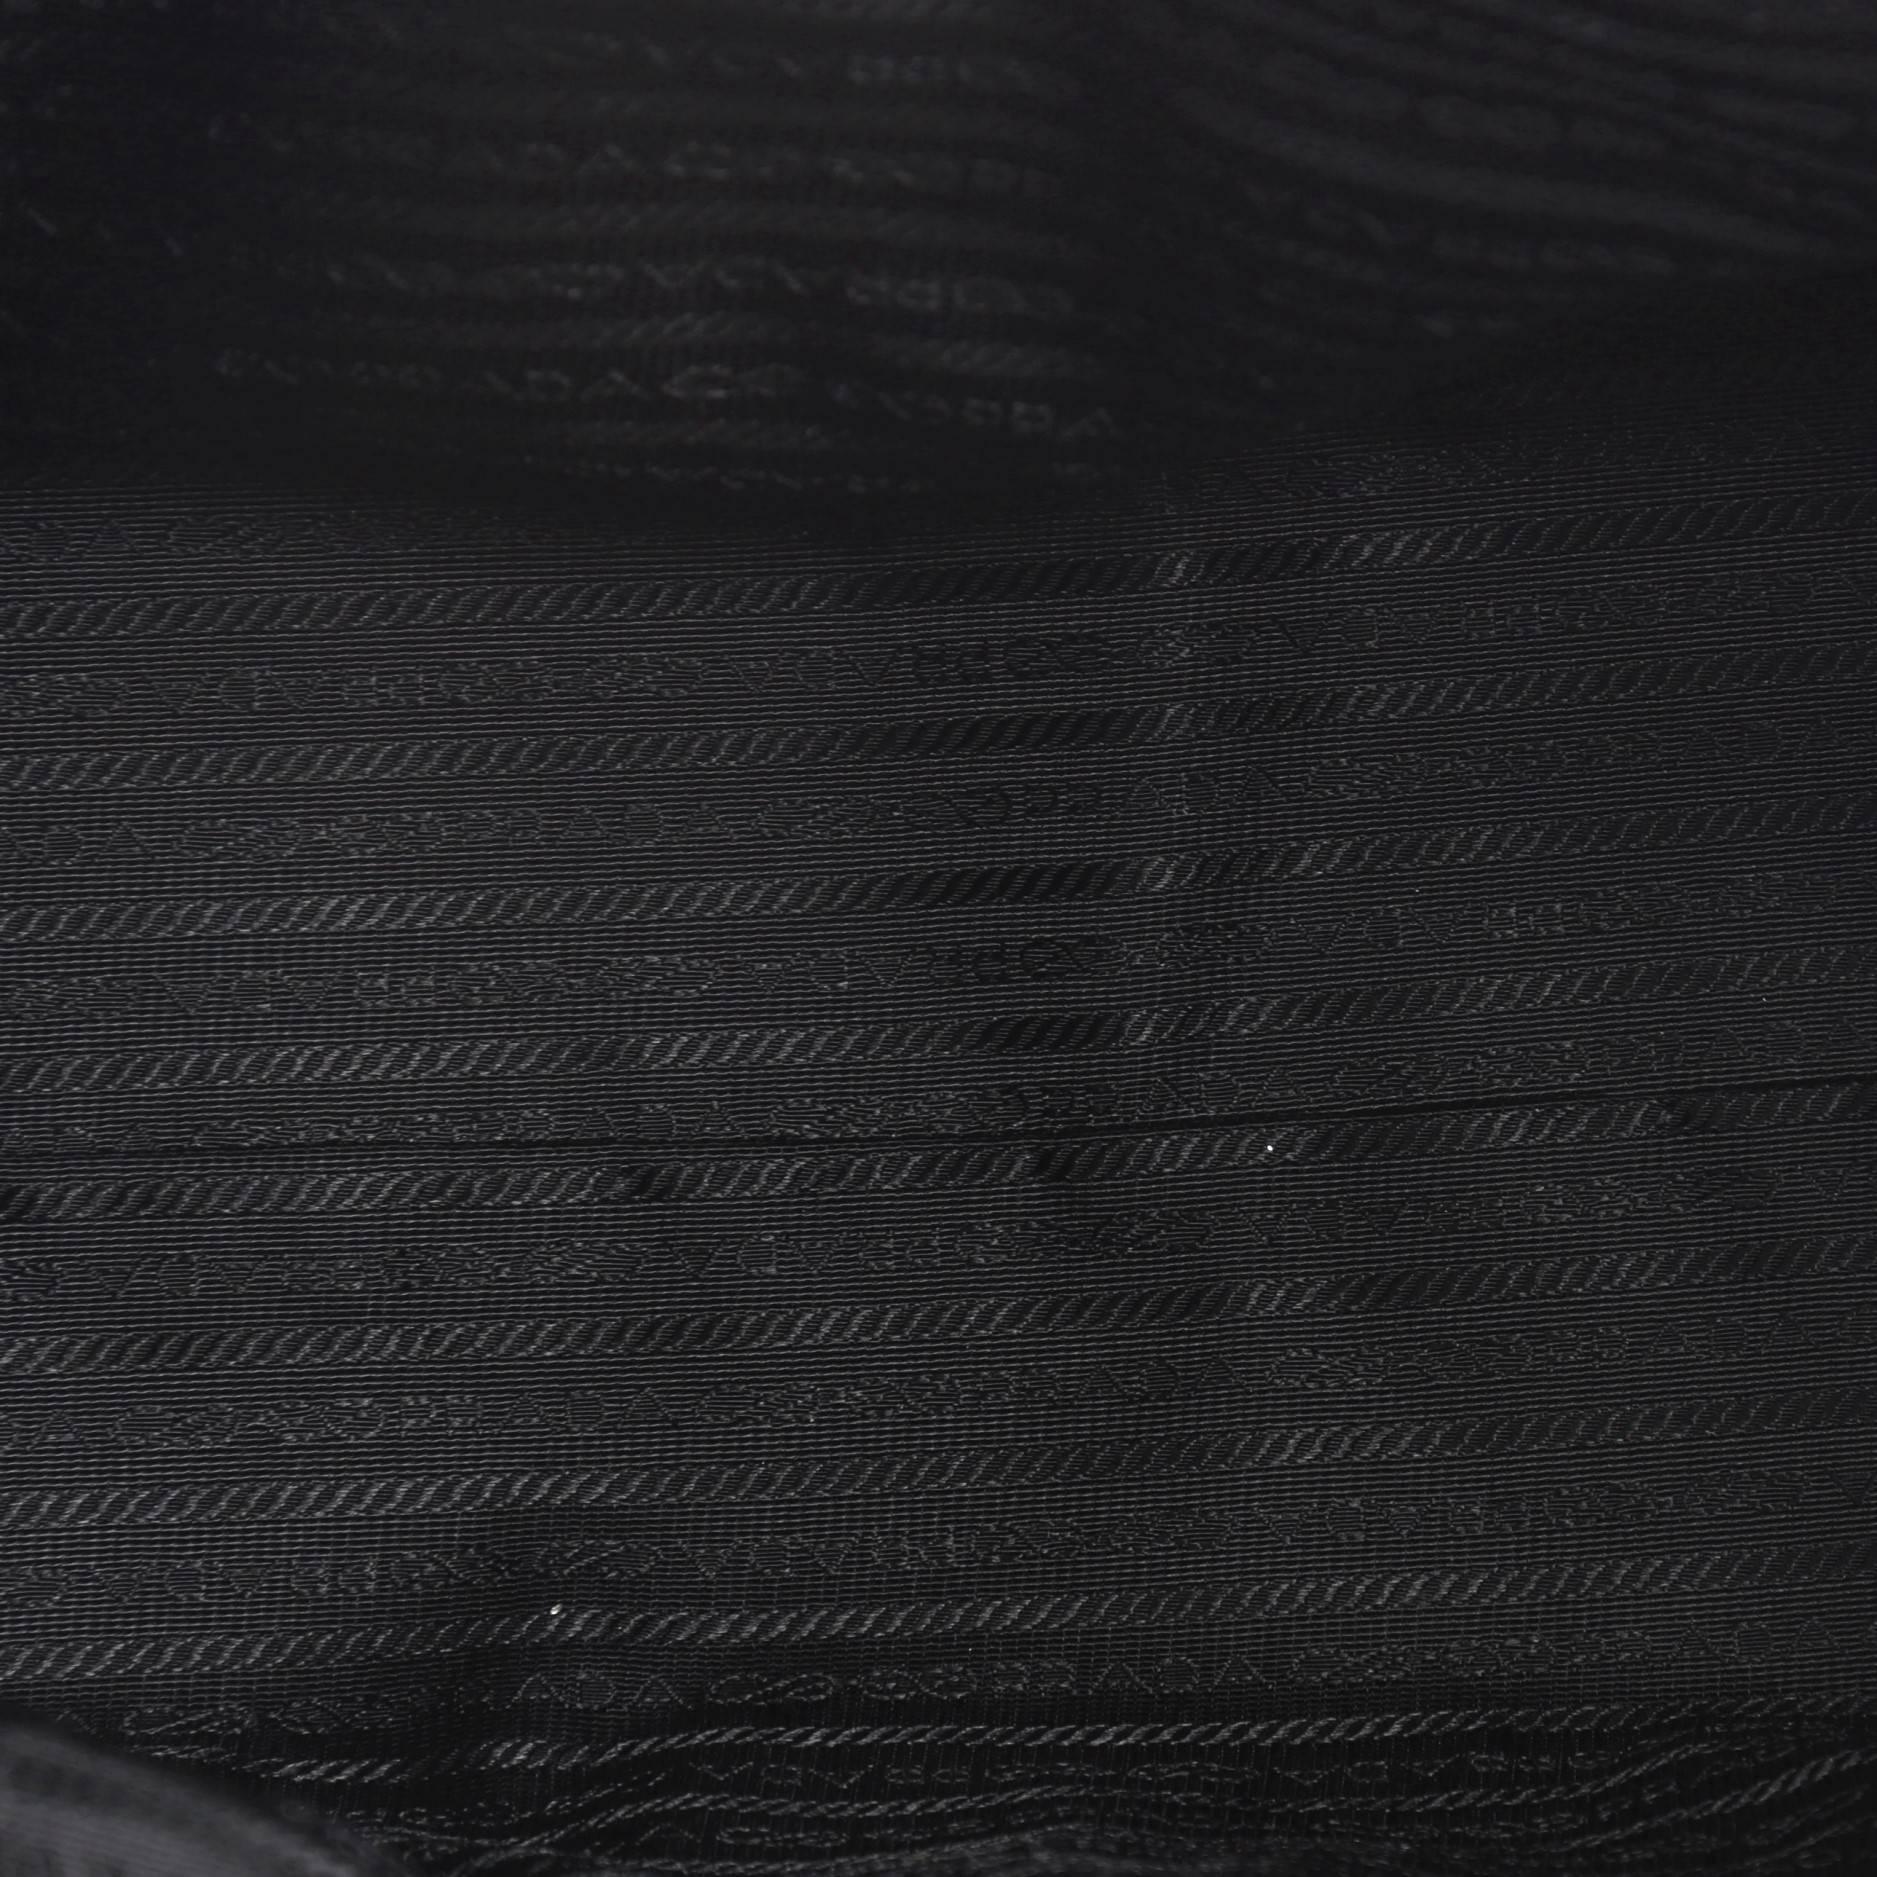  Prada Gaufre Tote Nappa Leather Large 1